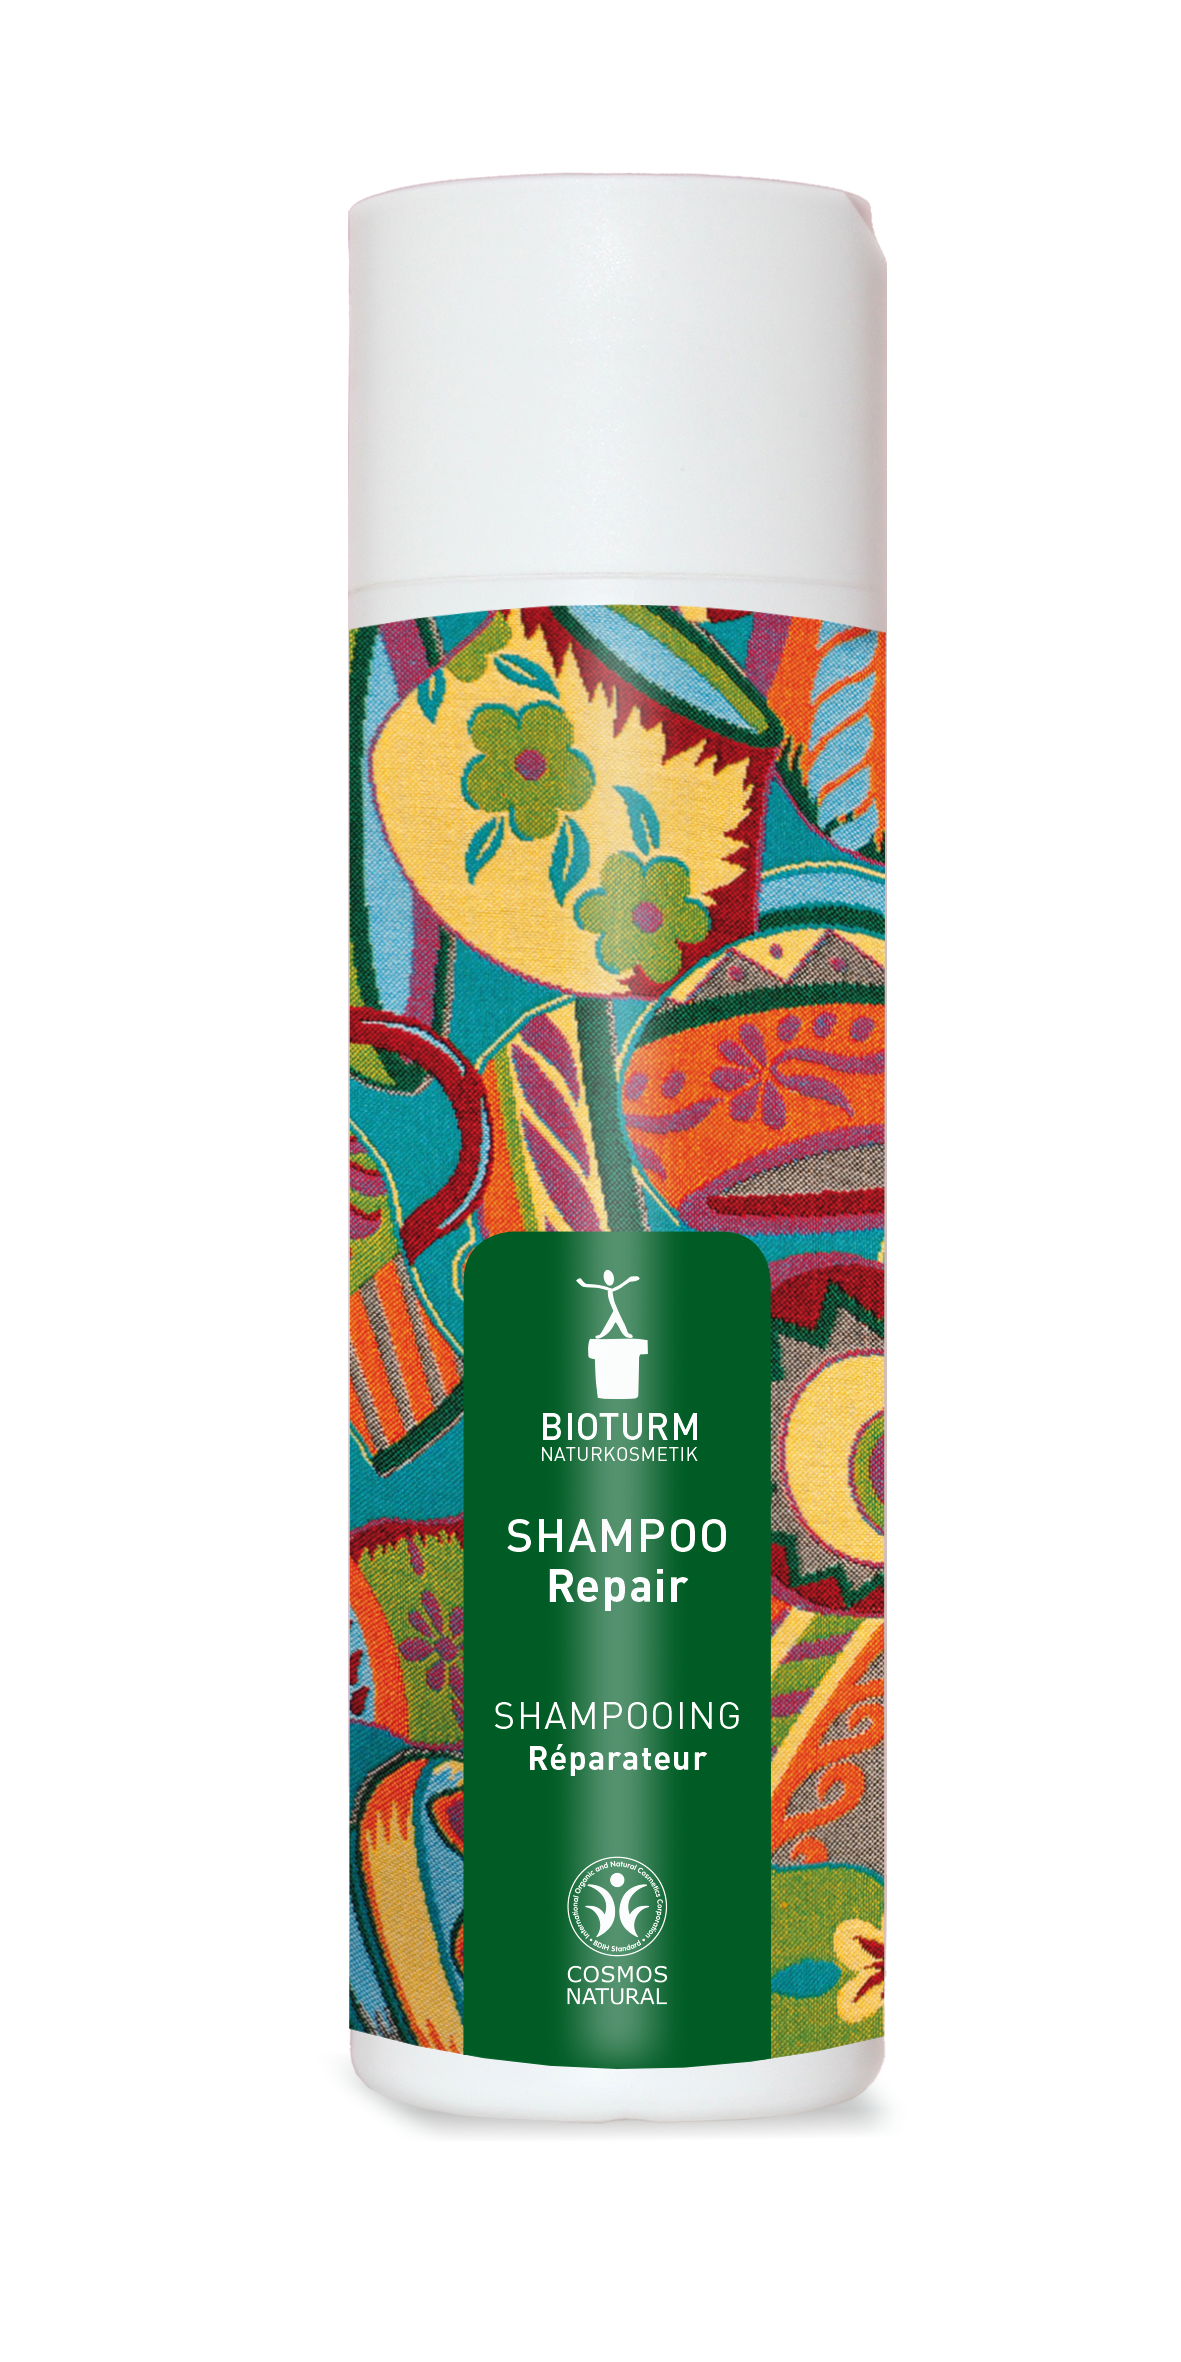 Bioturm - Shampoo Repair 200 ml